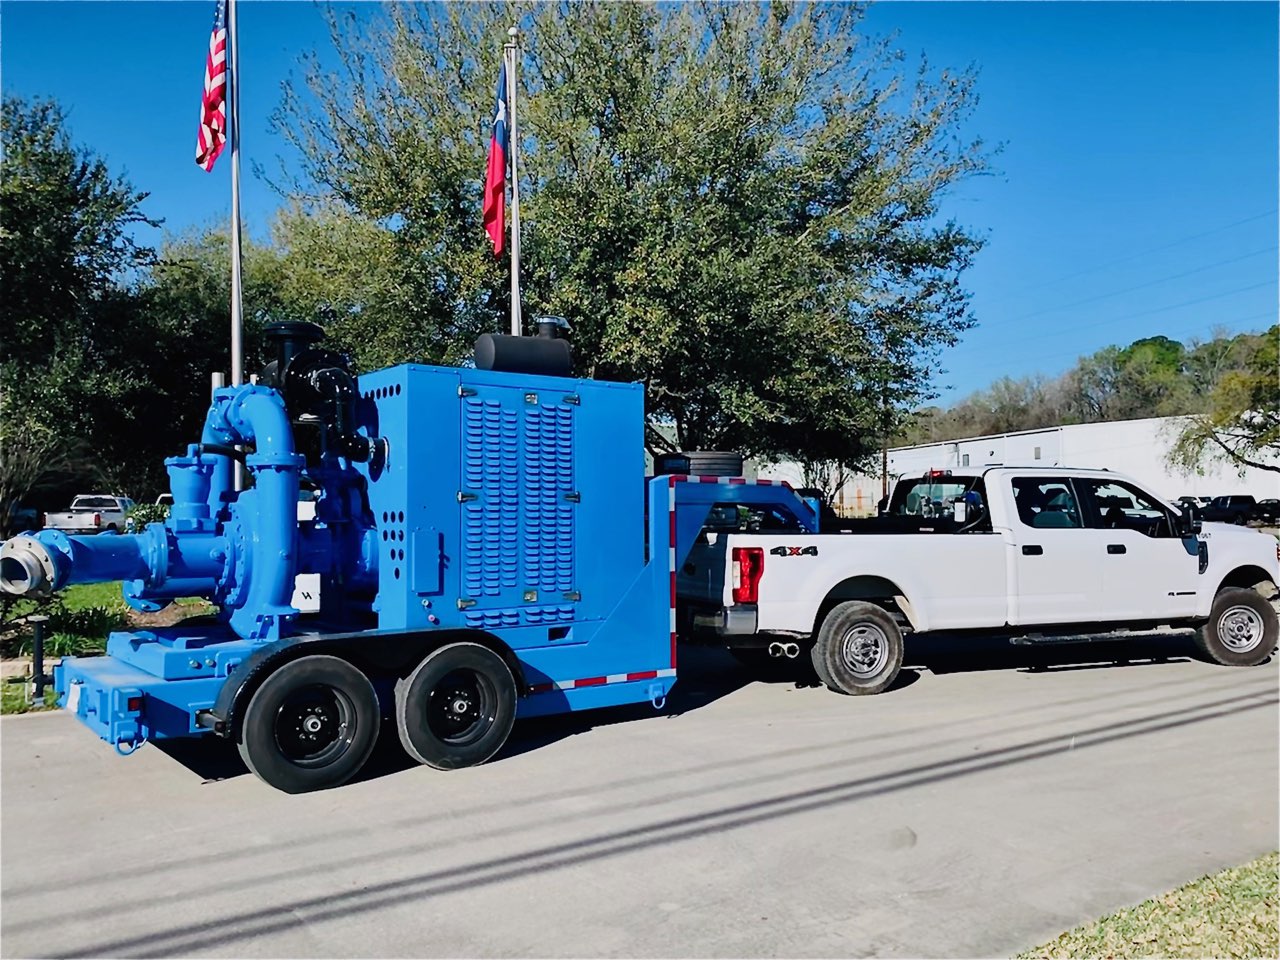 Truck hauling large blue pump